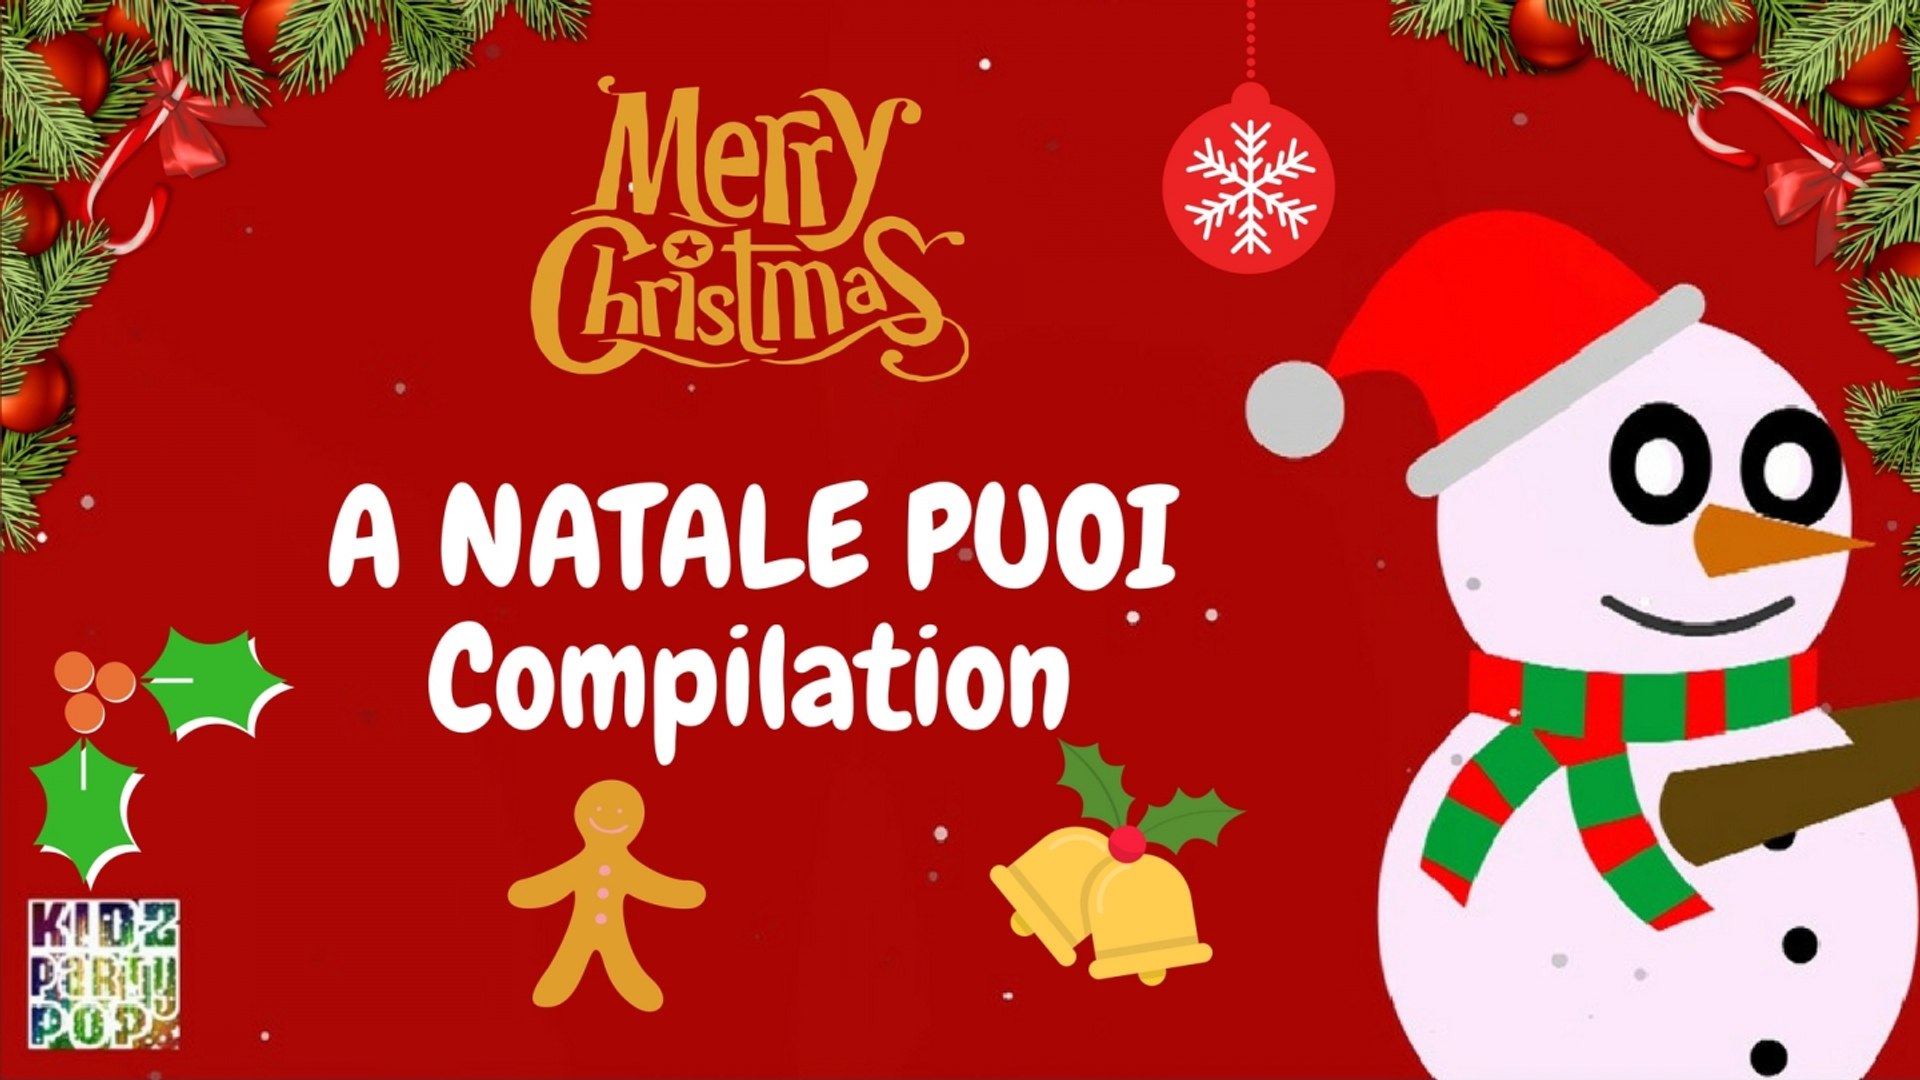 A Natale Puoi Testo.Le Piu Belle Canzoni Di Natale A Natale Puoi Compilation Video Dailymotion